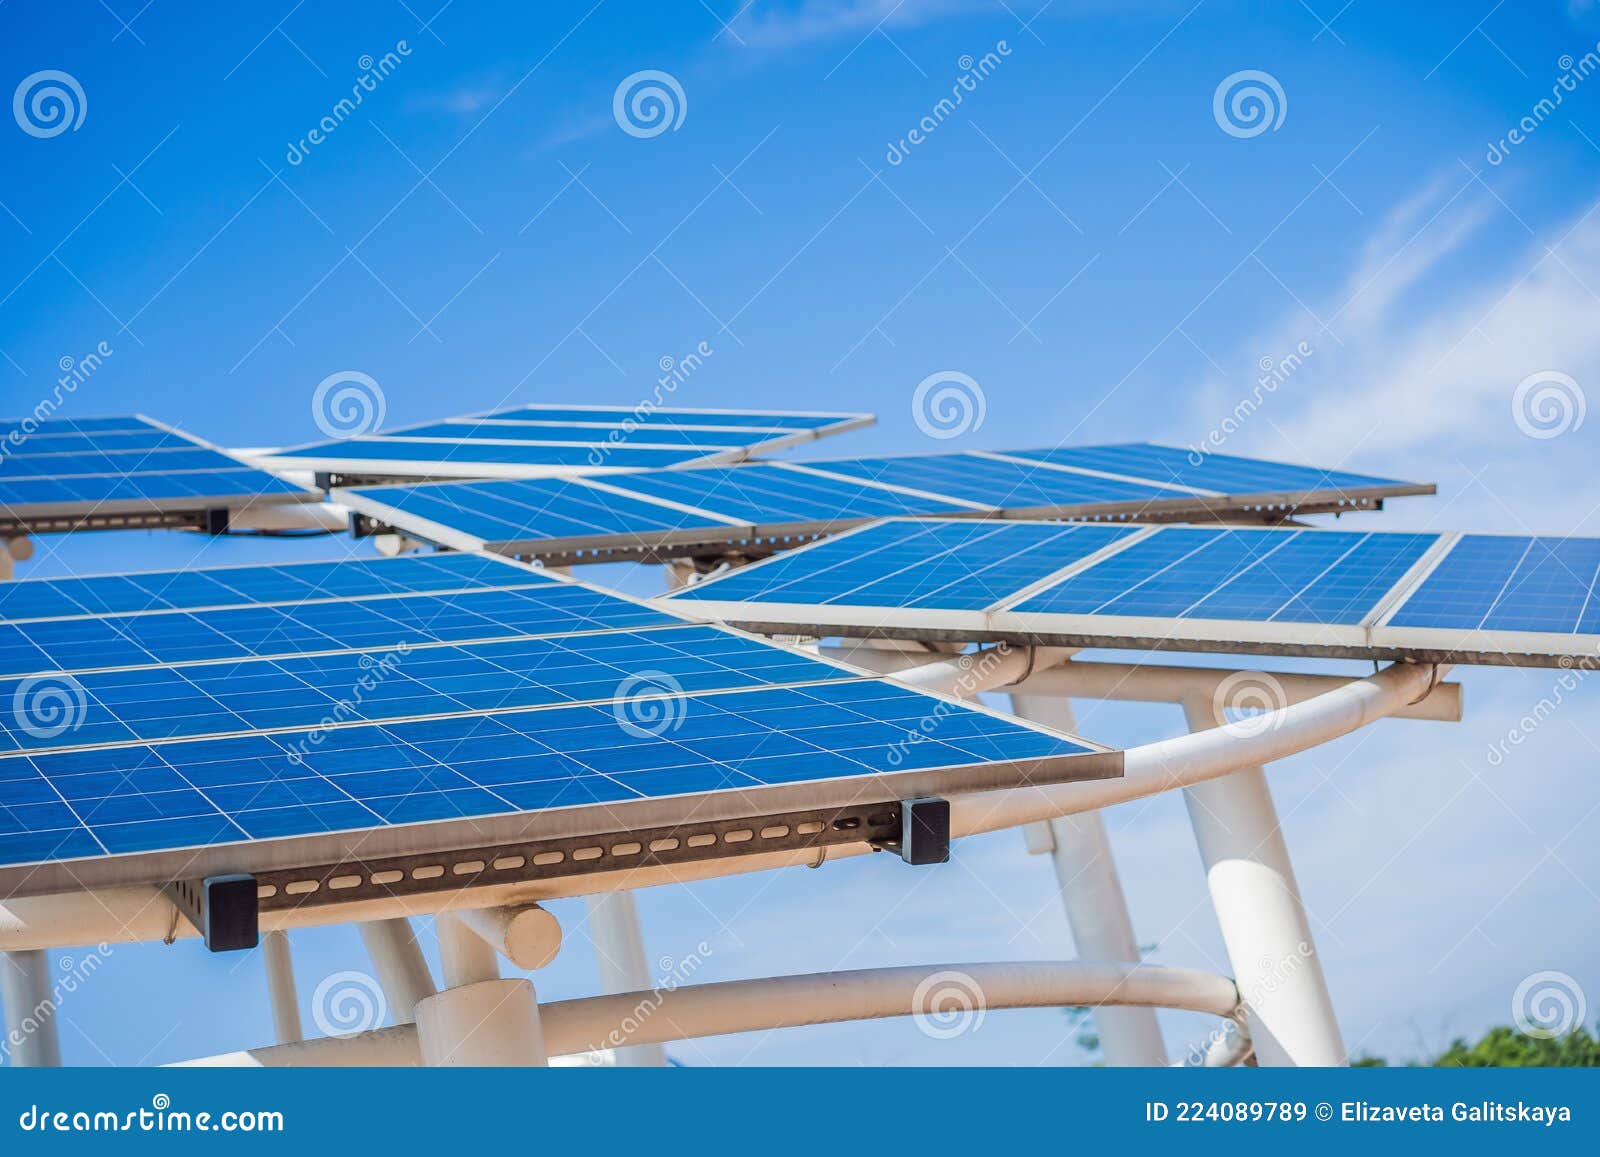 Power plant using renewable solar energy with sun.